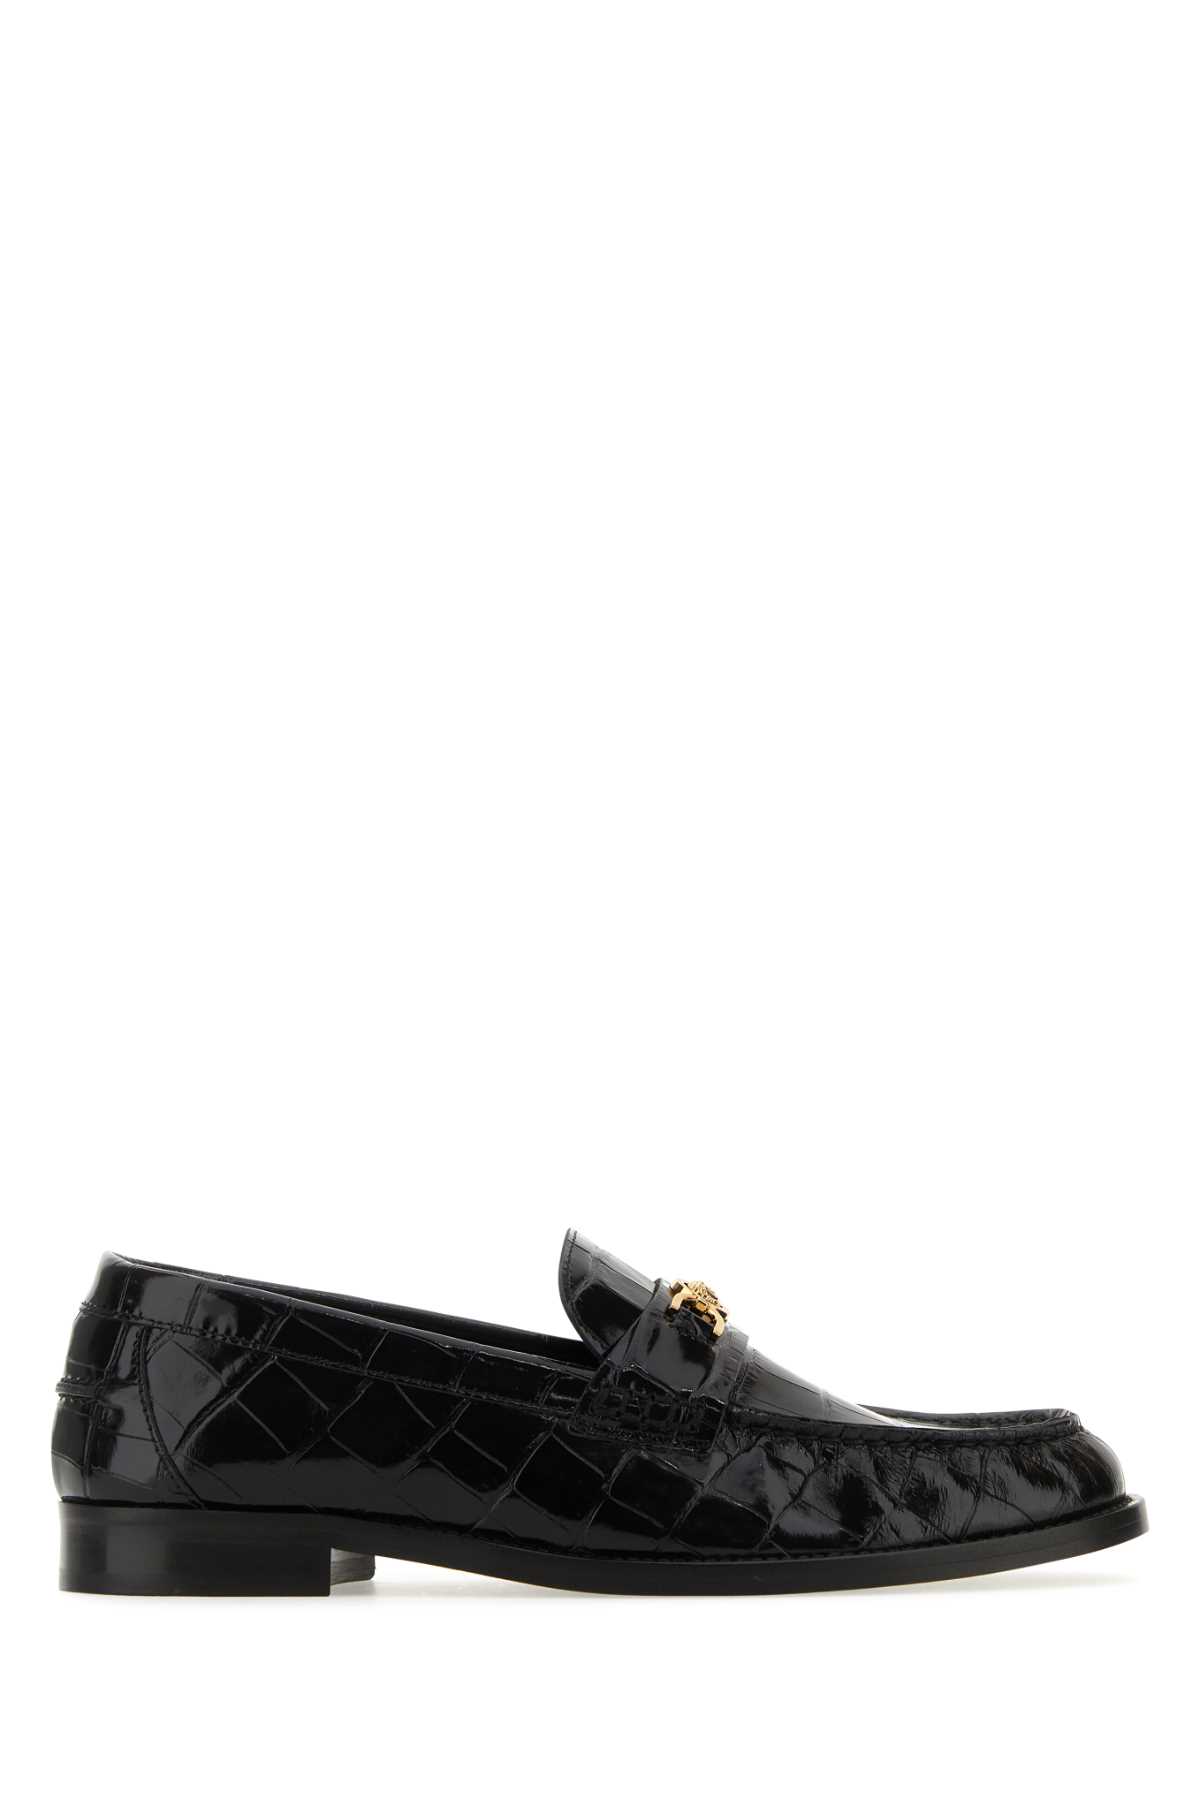 Versace Black Leather Medusa 95 Loafers